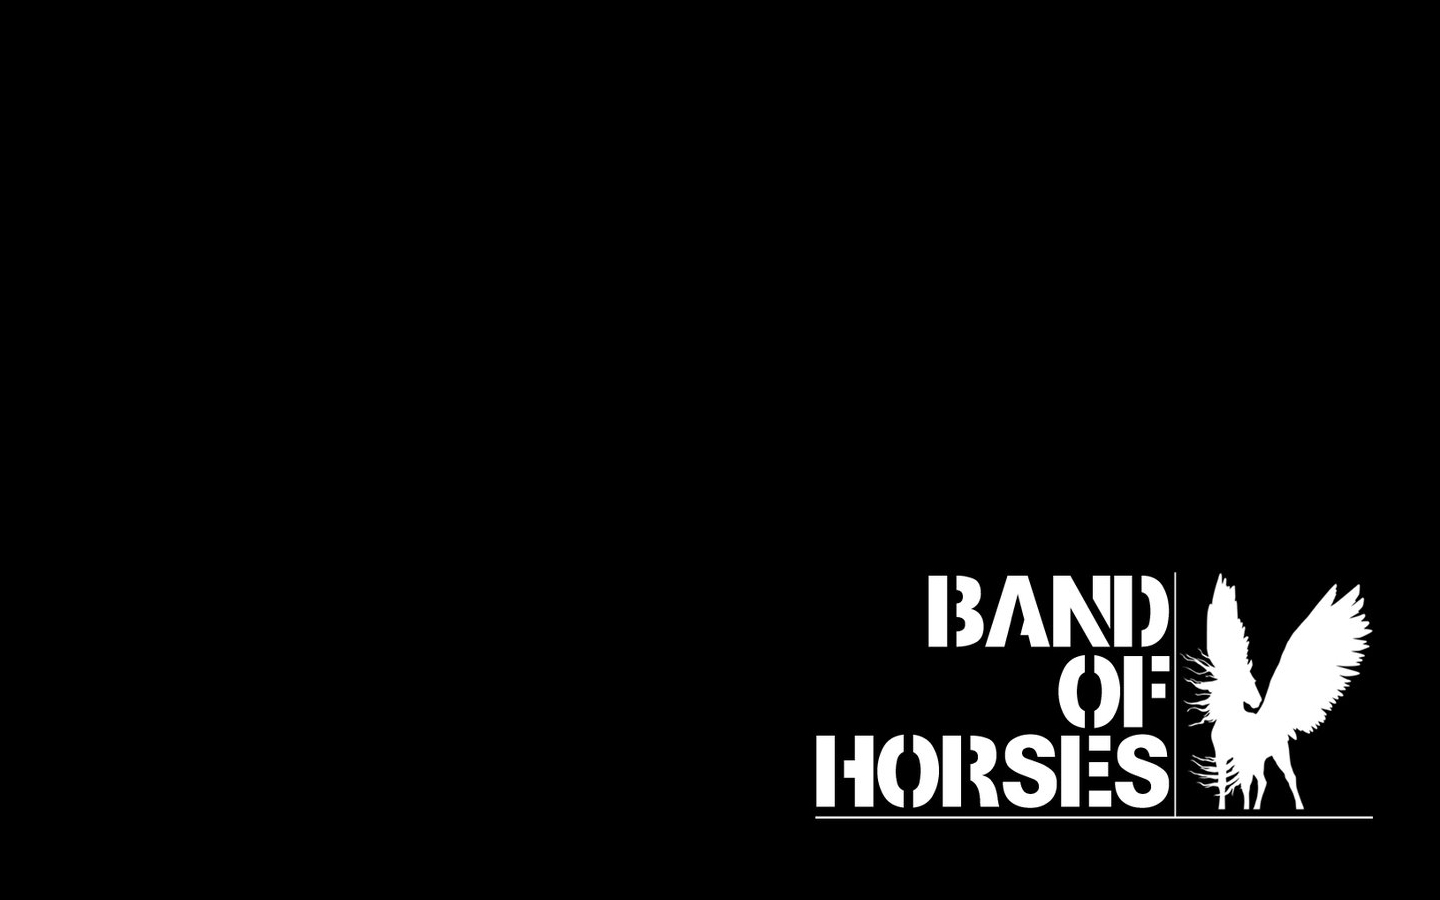 Band of horses